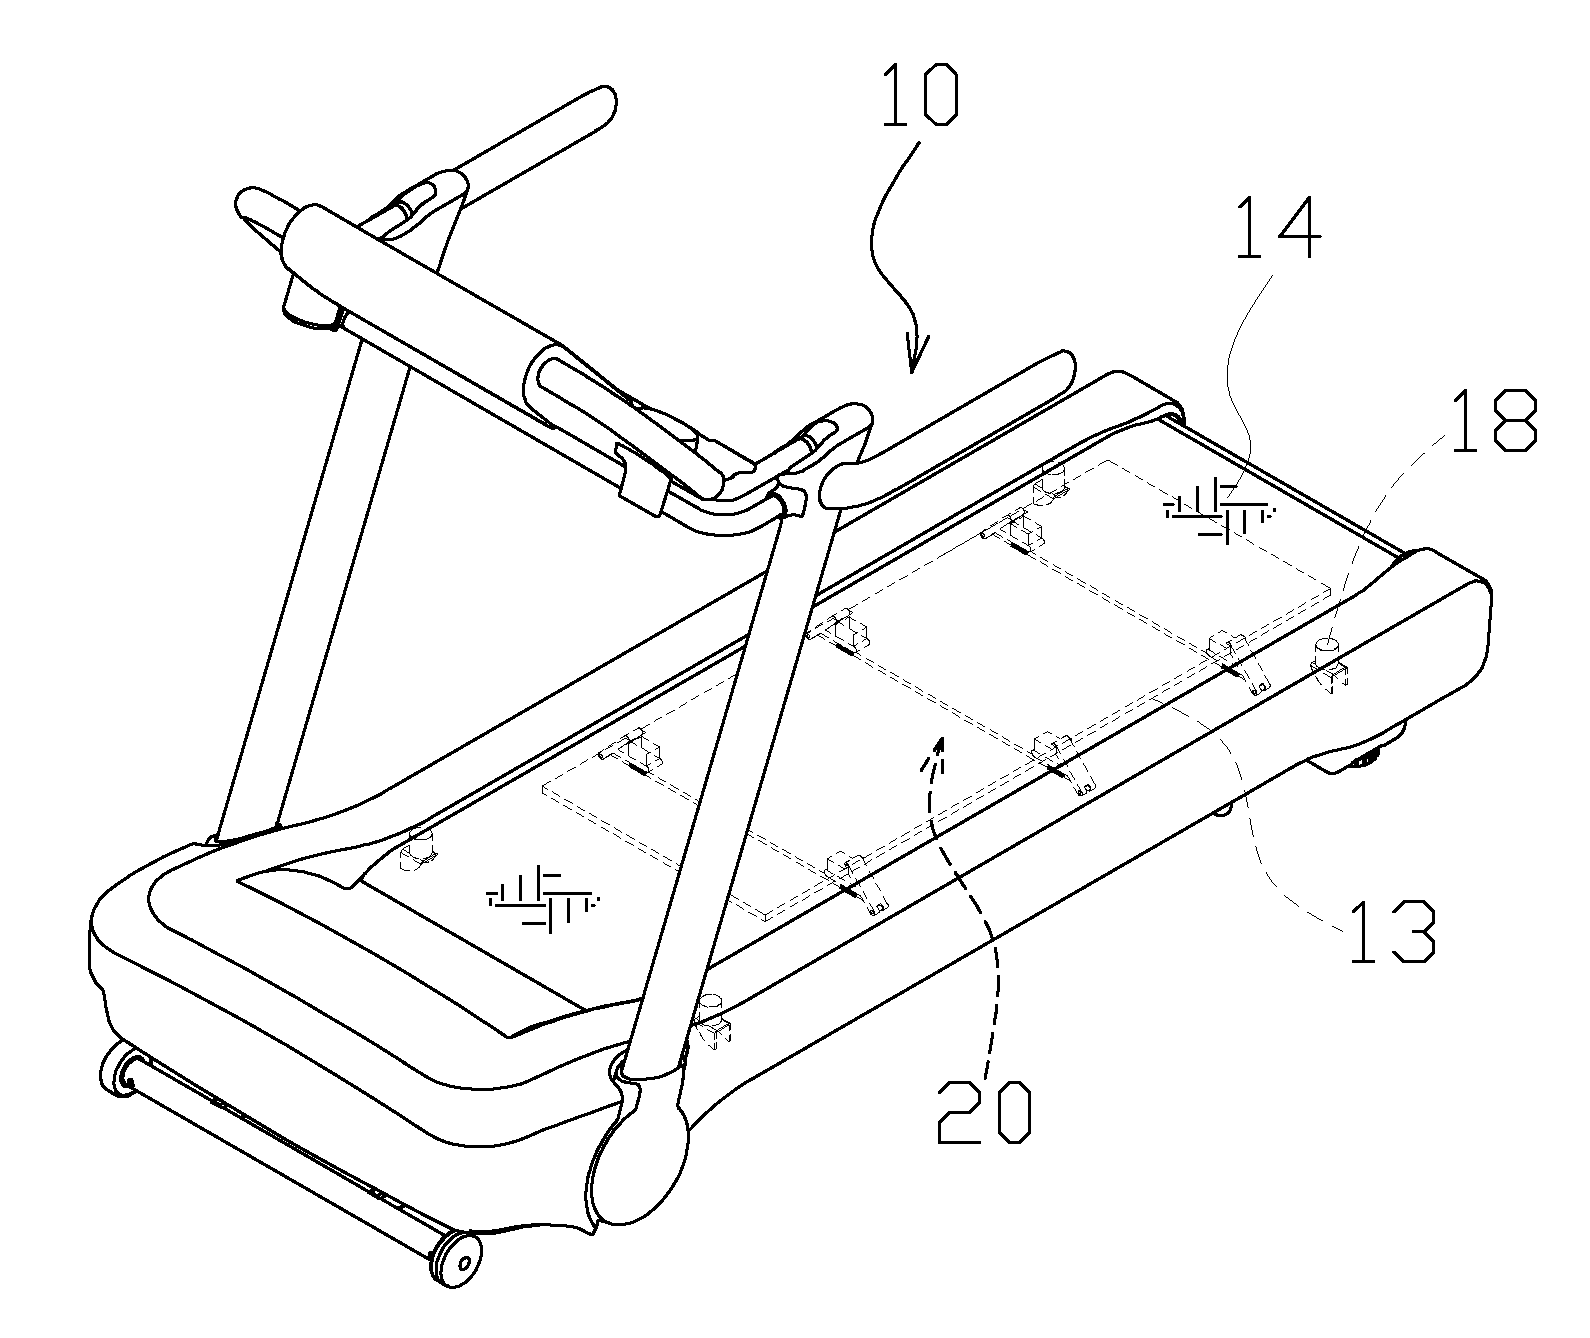 Cushioning mechanism of a treadmill